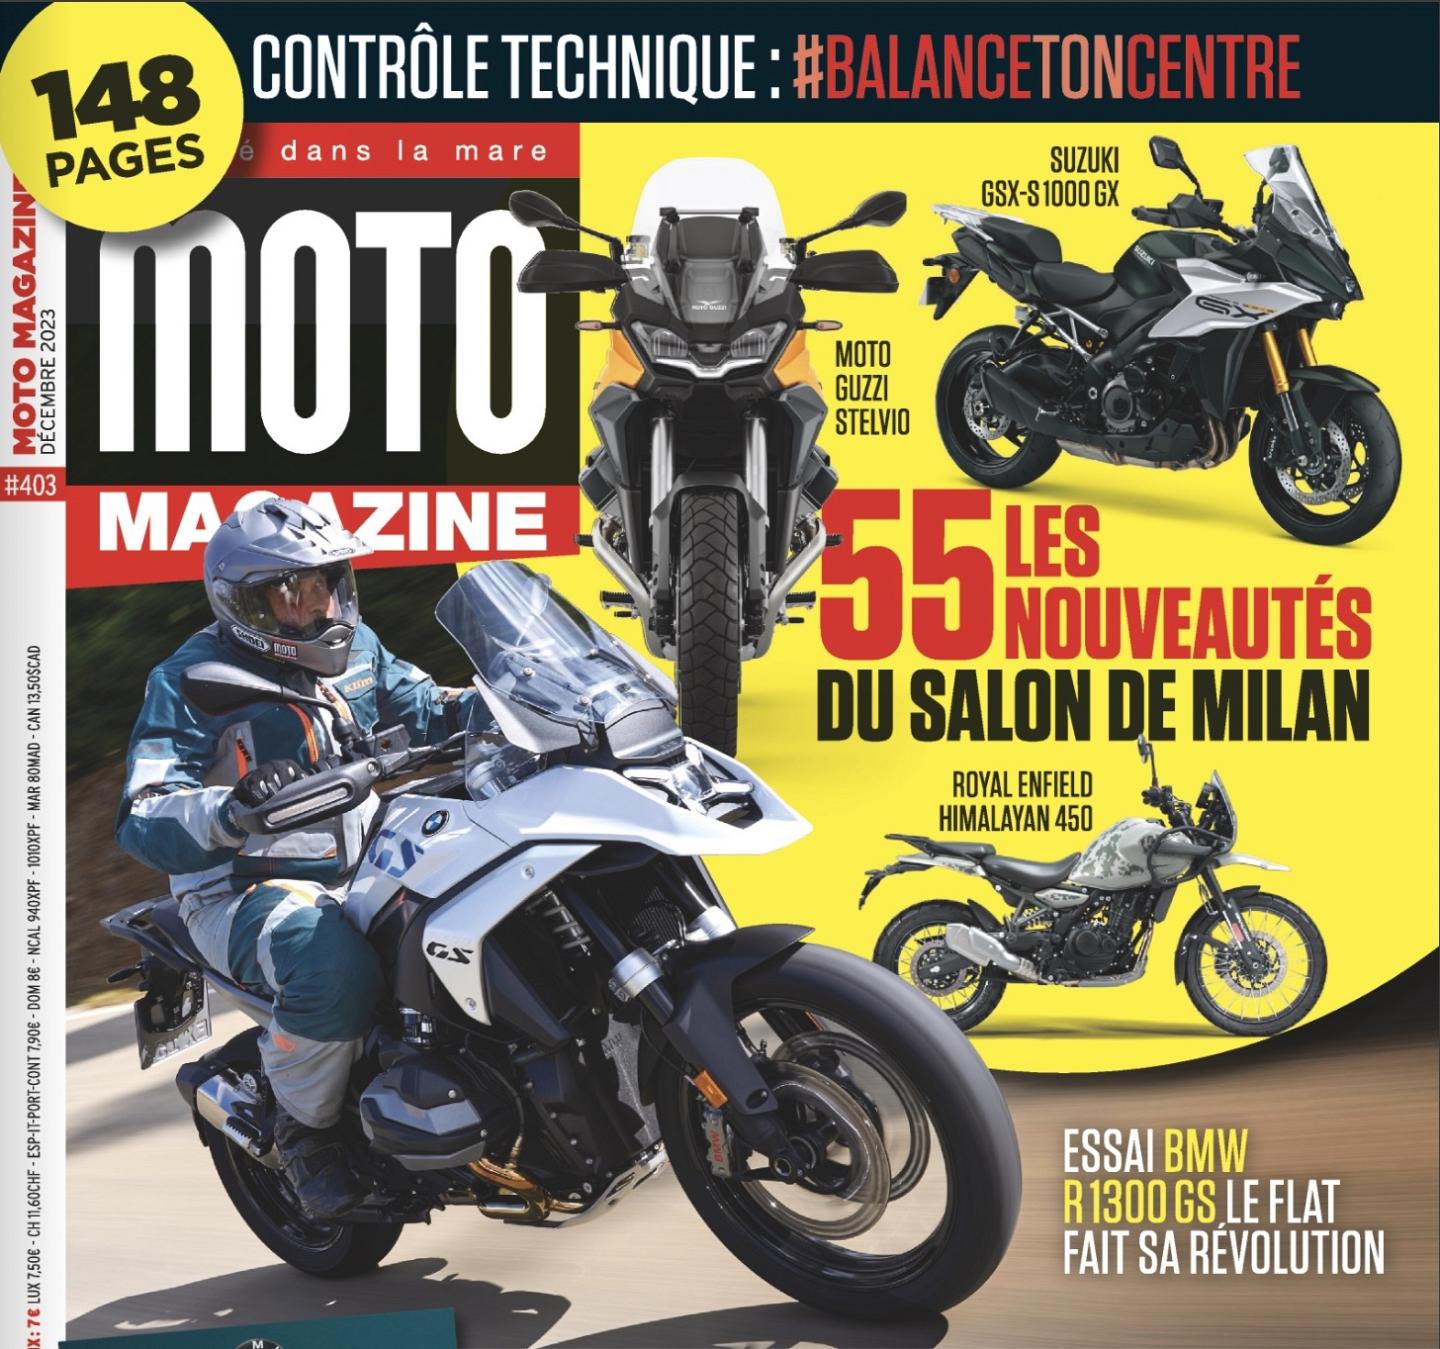 Moto Magazine n°403 est en kiosque !